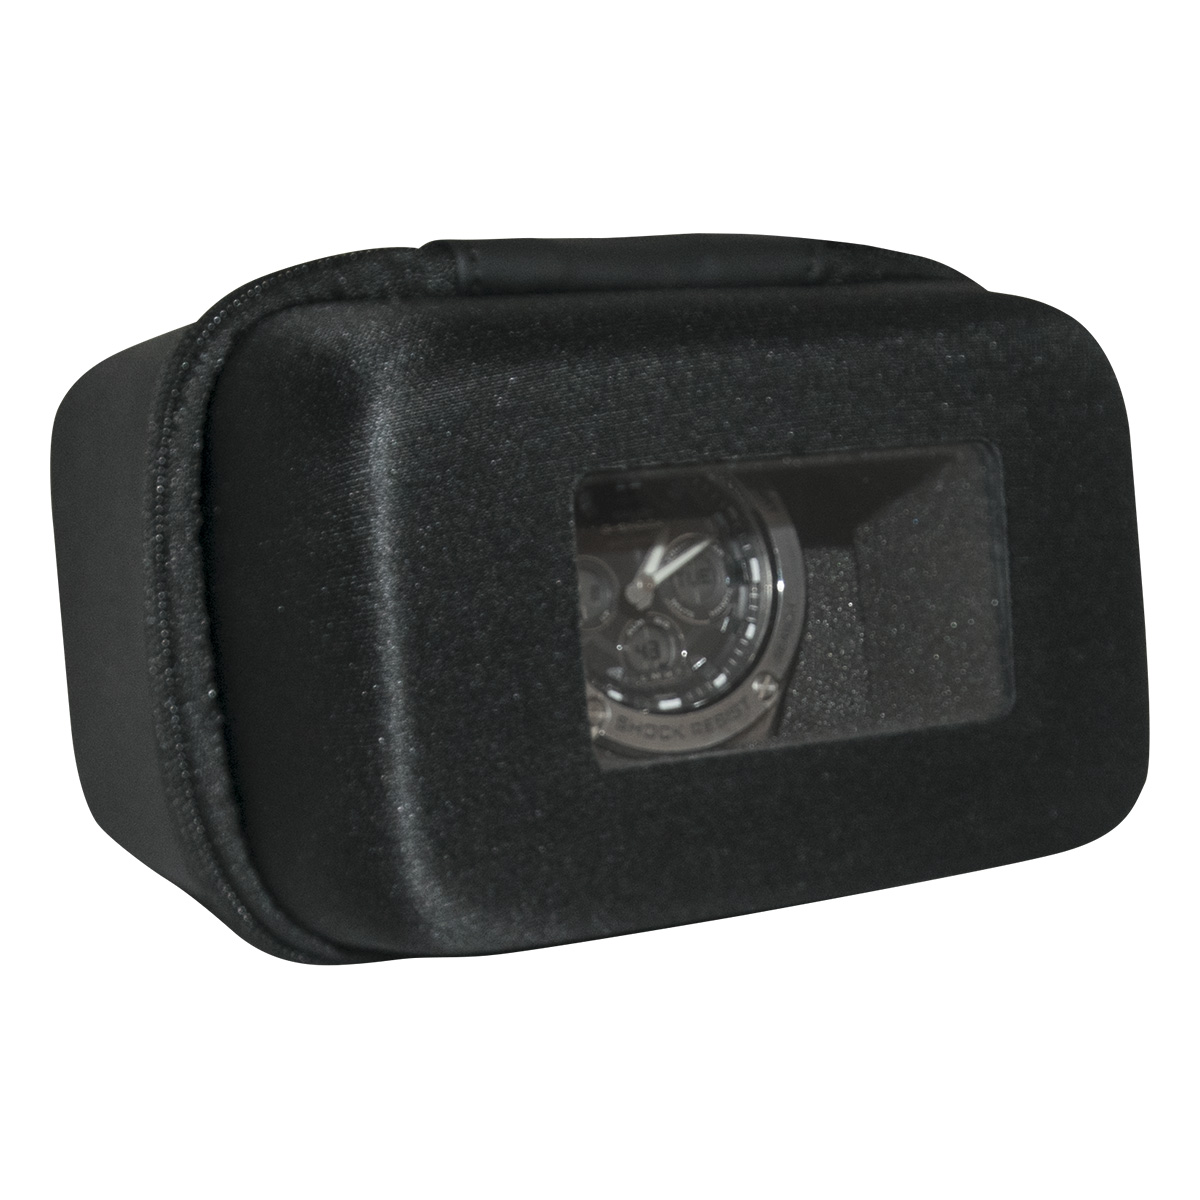 Watch Box, watch case black/black, with viewing window